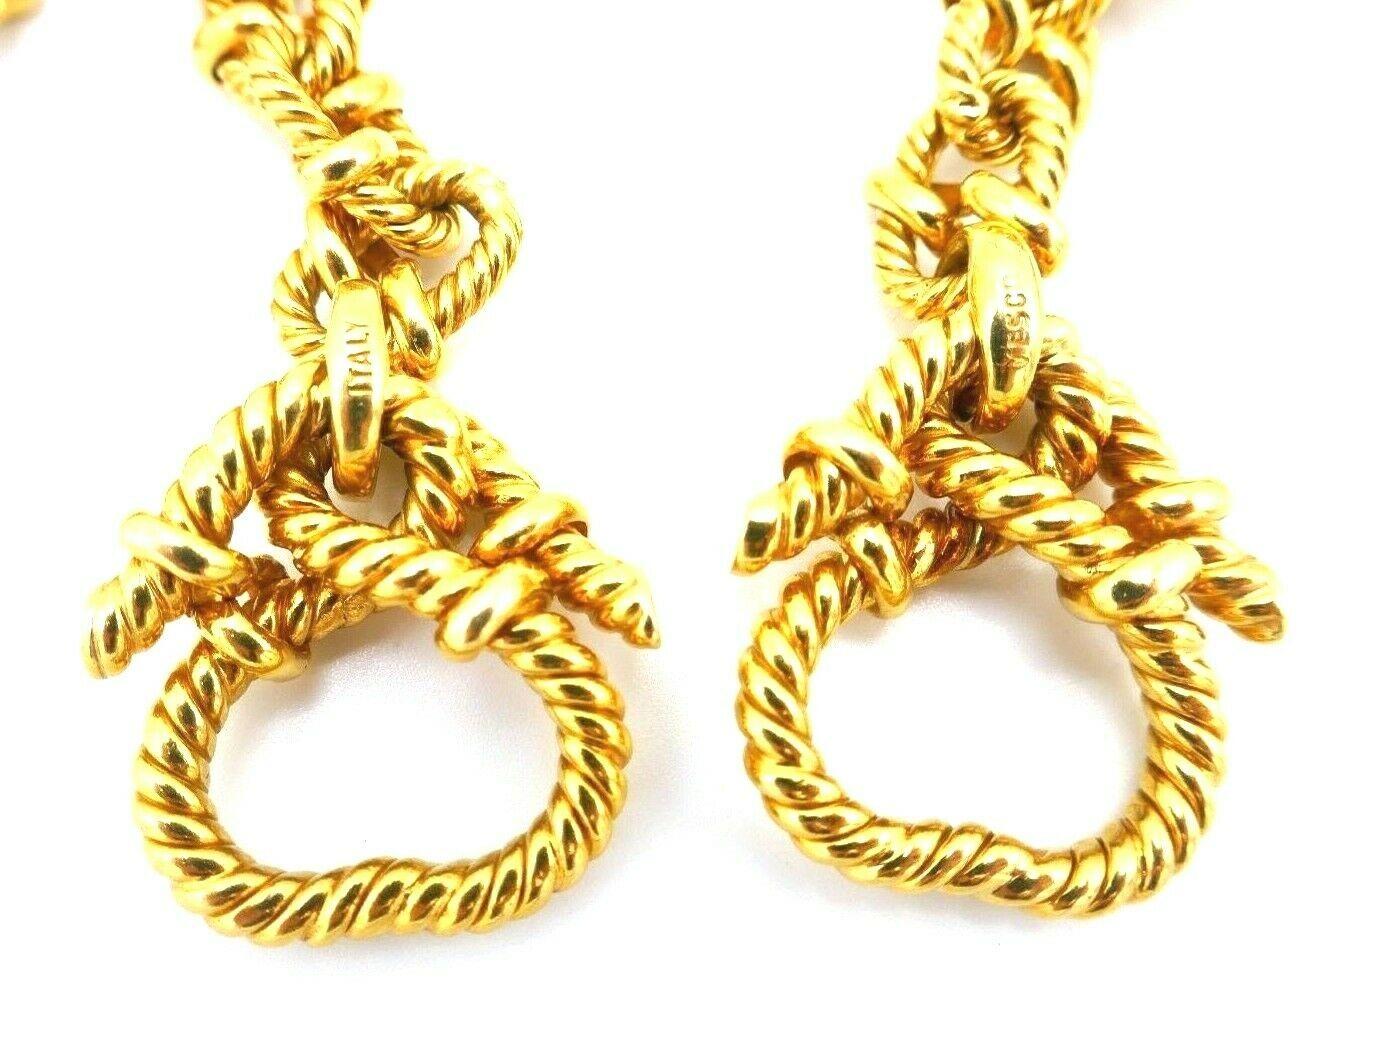 Vesco Italy Yellow Gold Rope Chain Necklace Bracelet Set 2